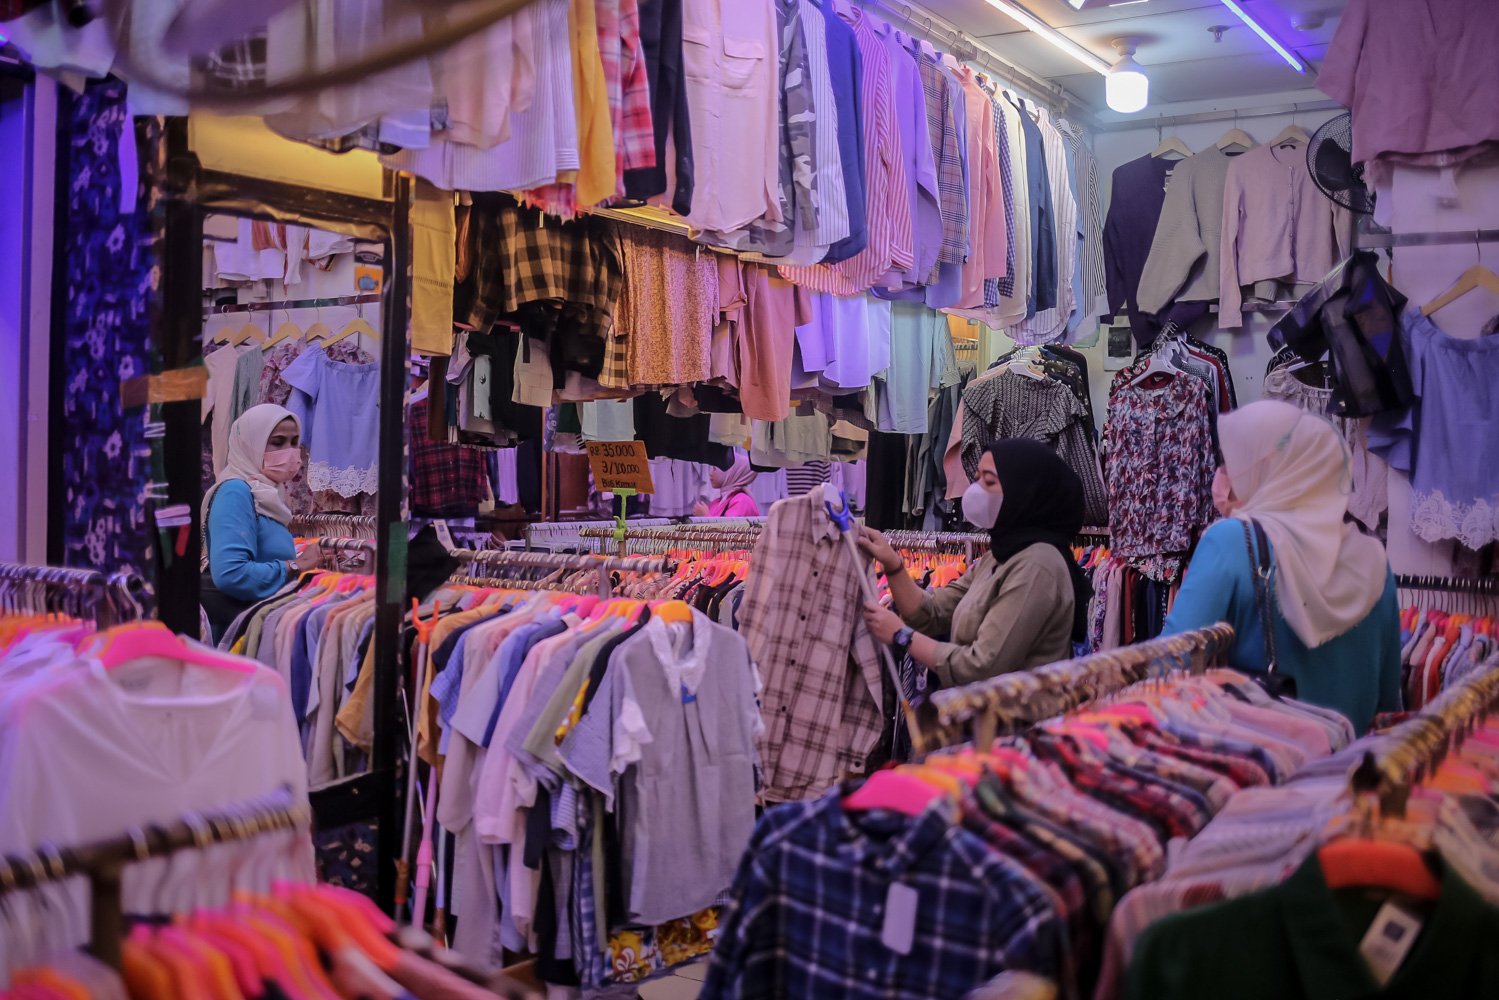 Calon pembeli memilih pakaian bekas yang dijual di salah satu toko di Pasar Senen, Jakarta, Kamis (30/3). Menteri Koperasi dan Usaha Kecil Menengah Teten Masduki menyampaikan telah memberikan solusi untuk pedagang pakaian bekas yang terdampak larangan \